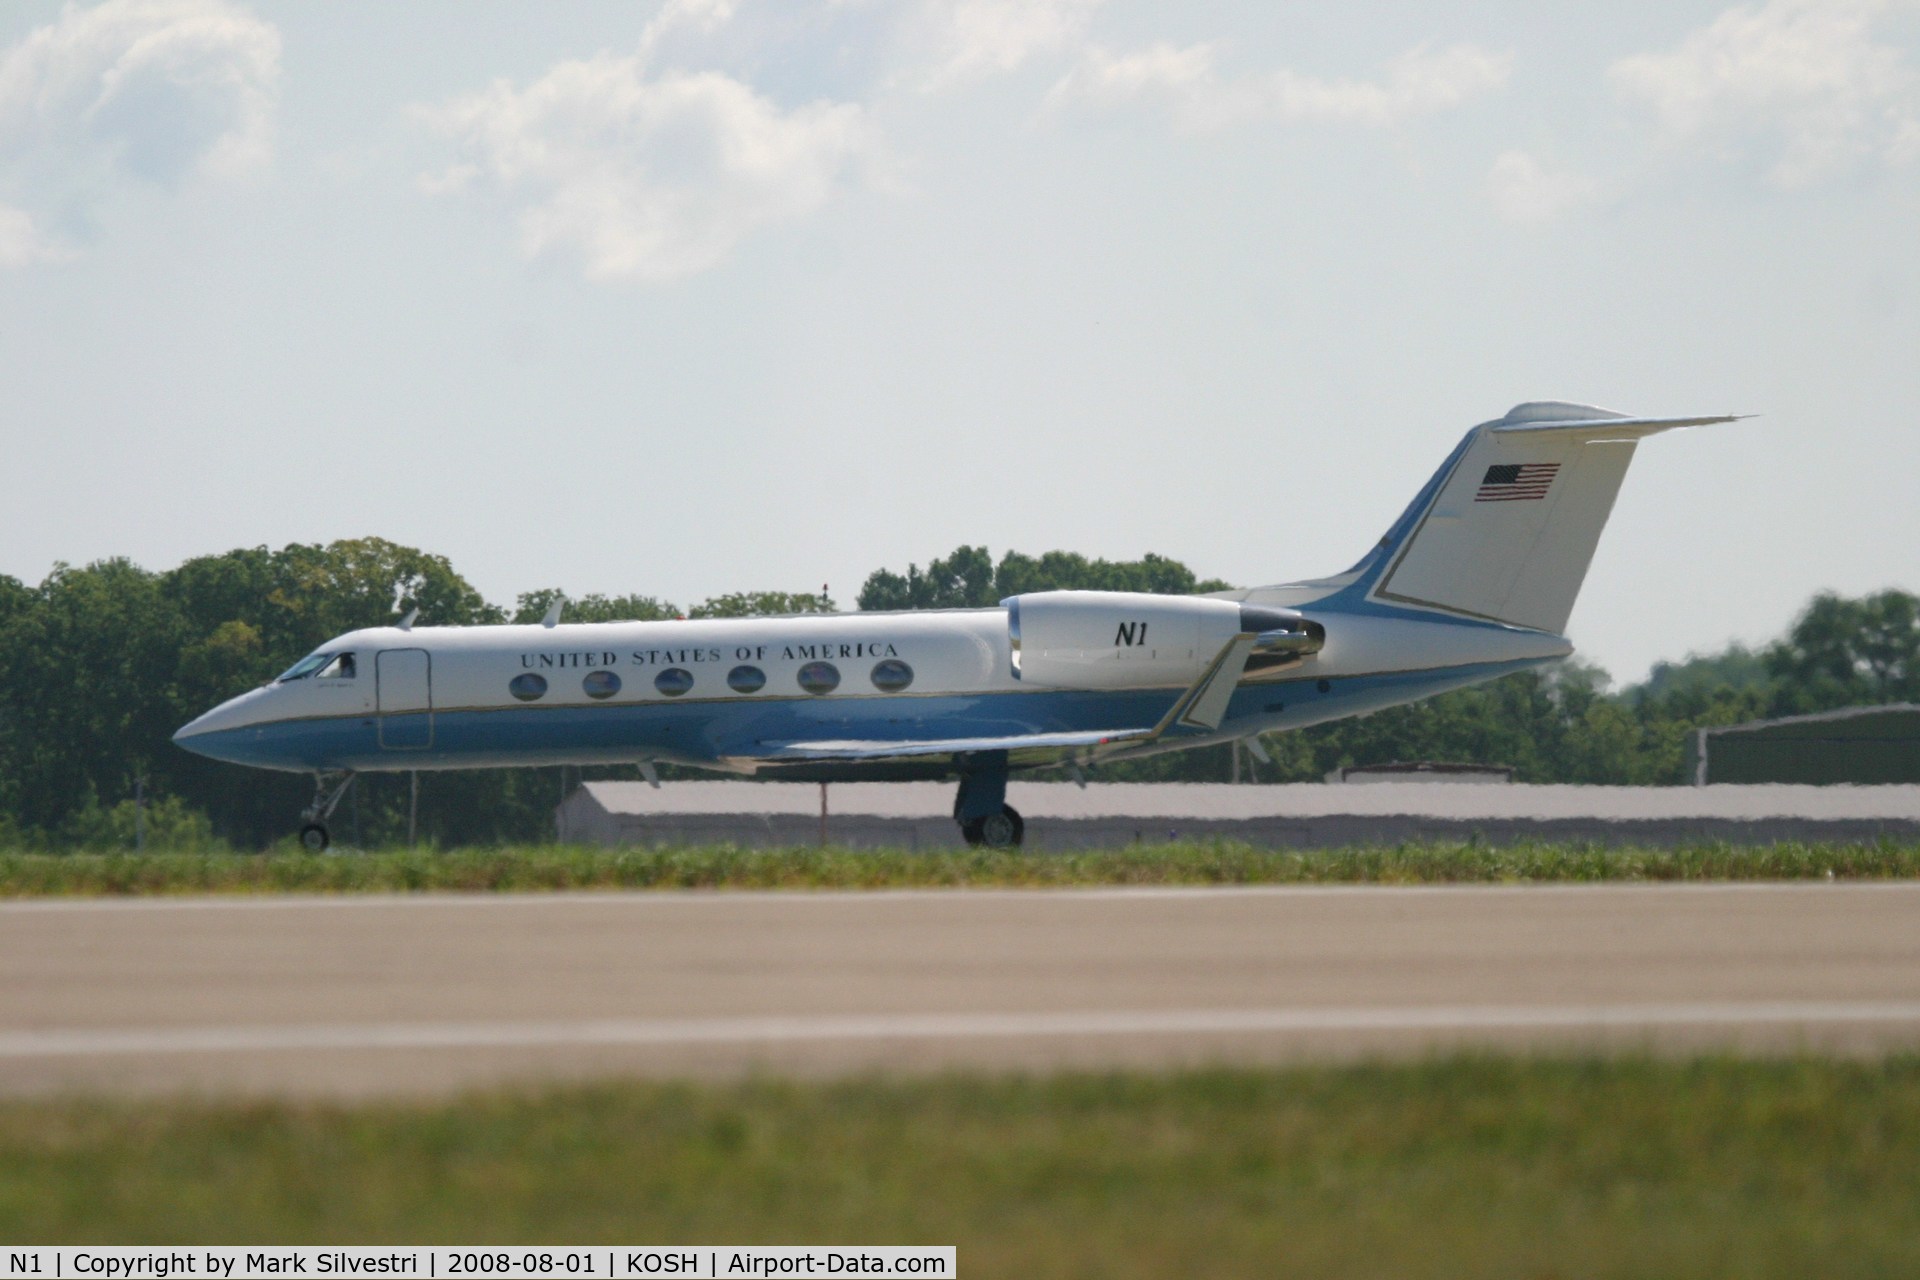 N1, 1988 Gulfstream Aerospace G-IV C/N 1071, Oshkosh 2008 - The FAA's Gulfstream G-IV